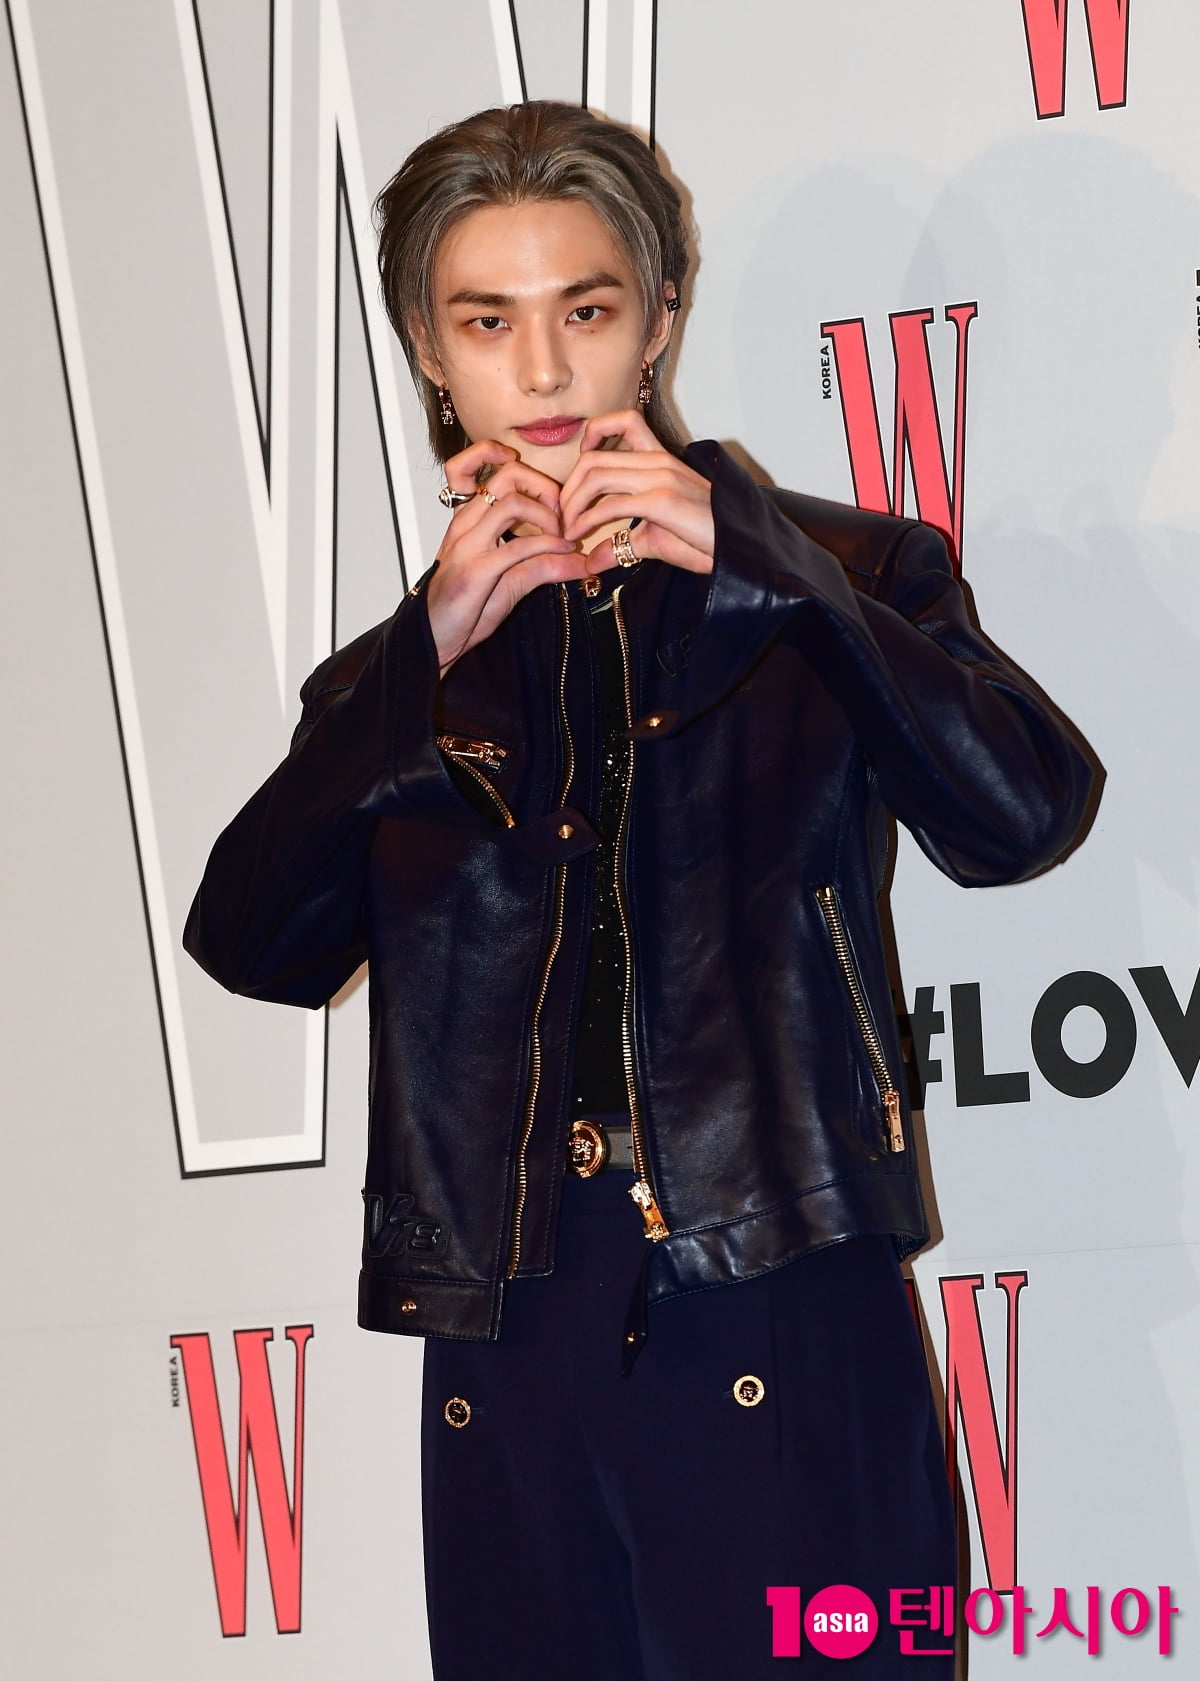 Stray Kids' Hyunjin donates 100 million won for the hearing impaired